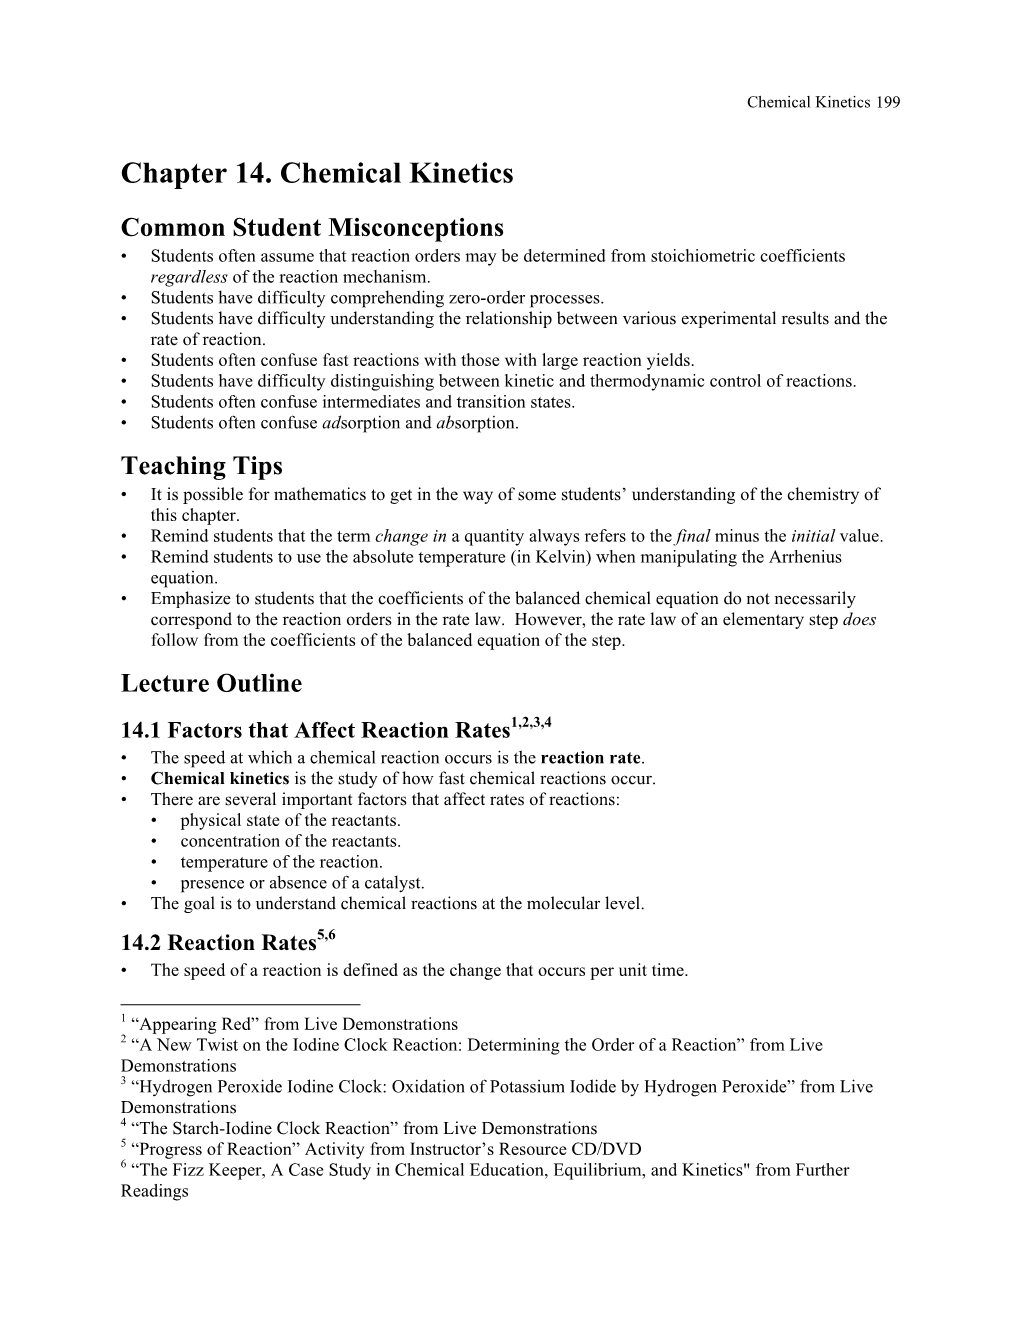 Chapter 14. Chemical Kinetics